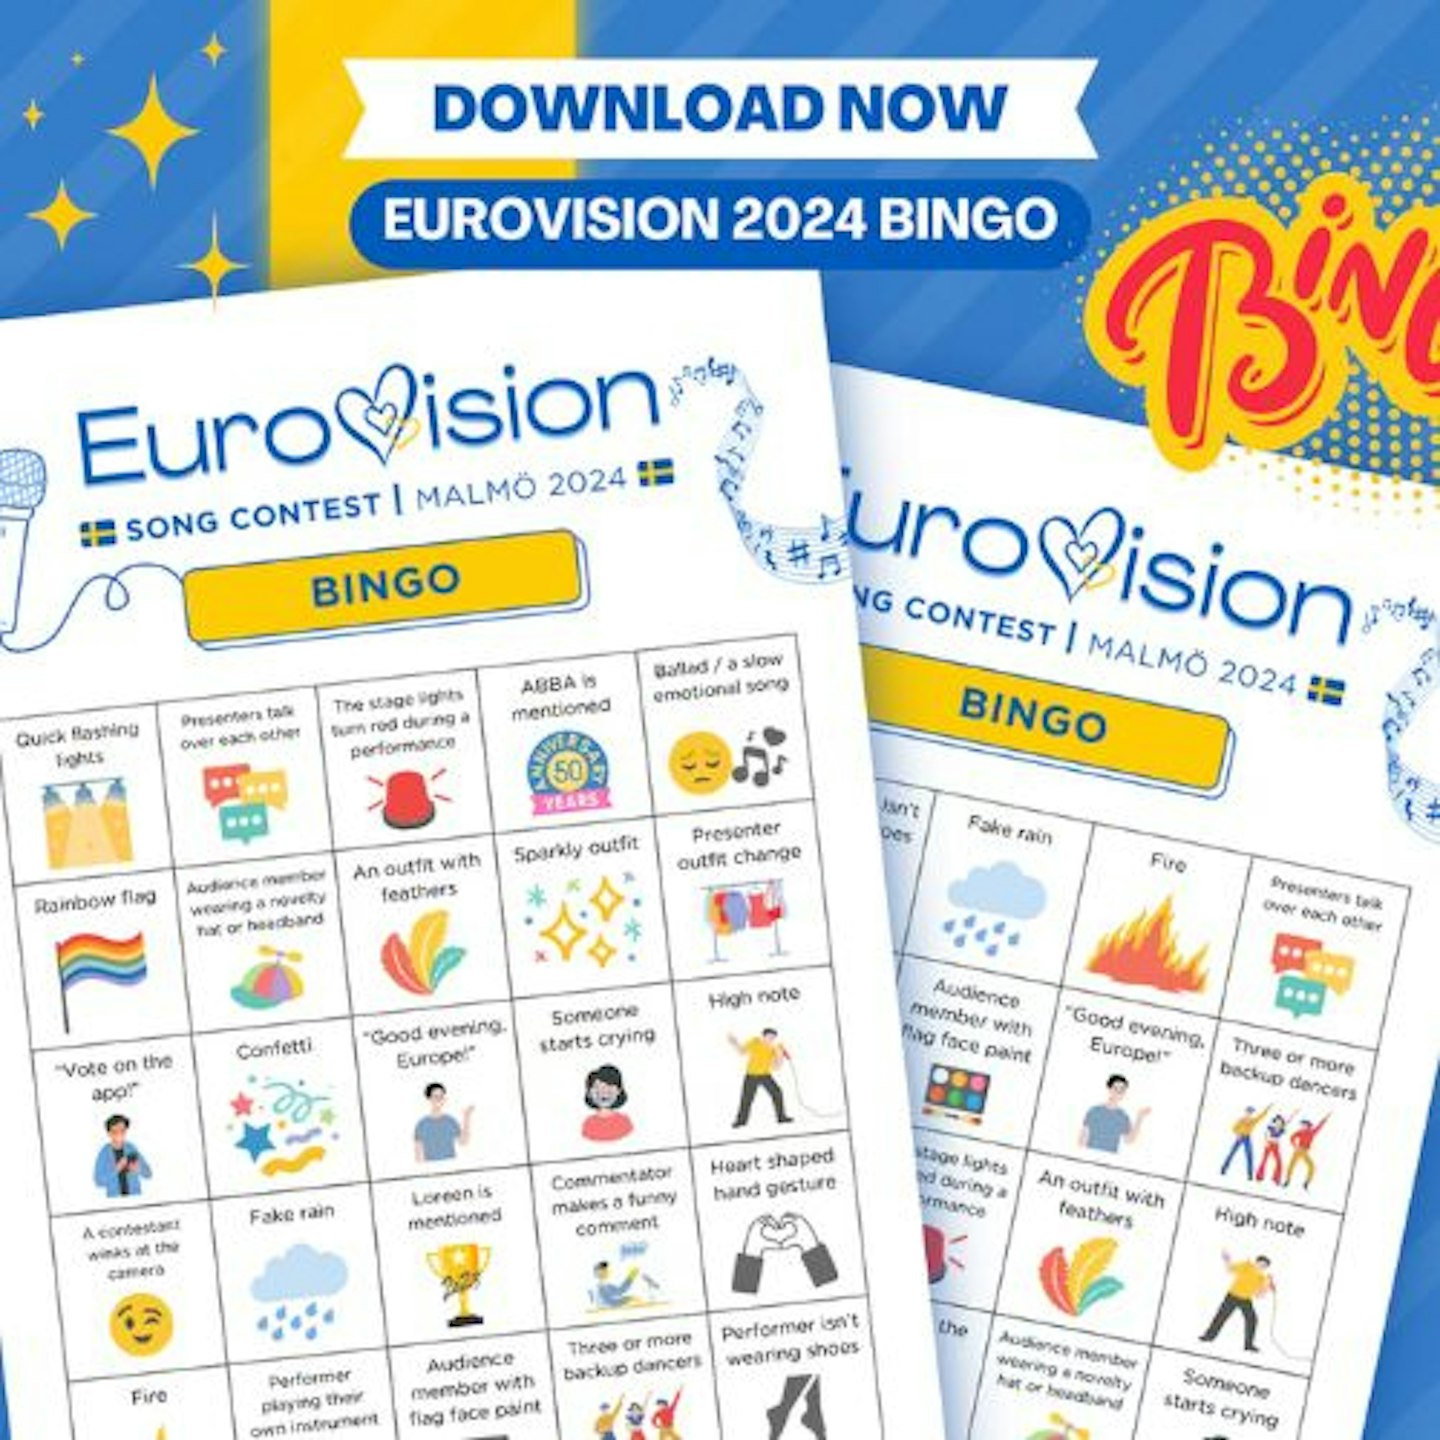 Eurovision 2024 Bingo Sheets (12 Player Cards)